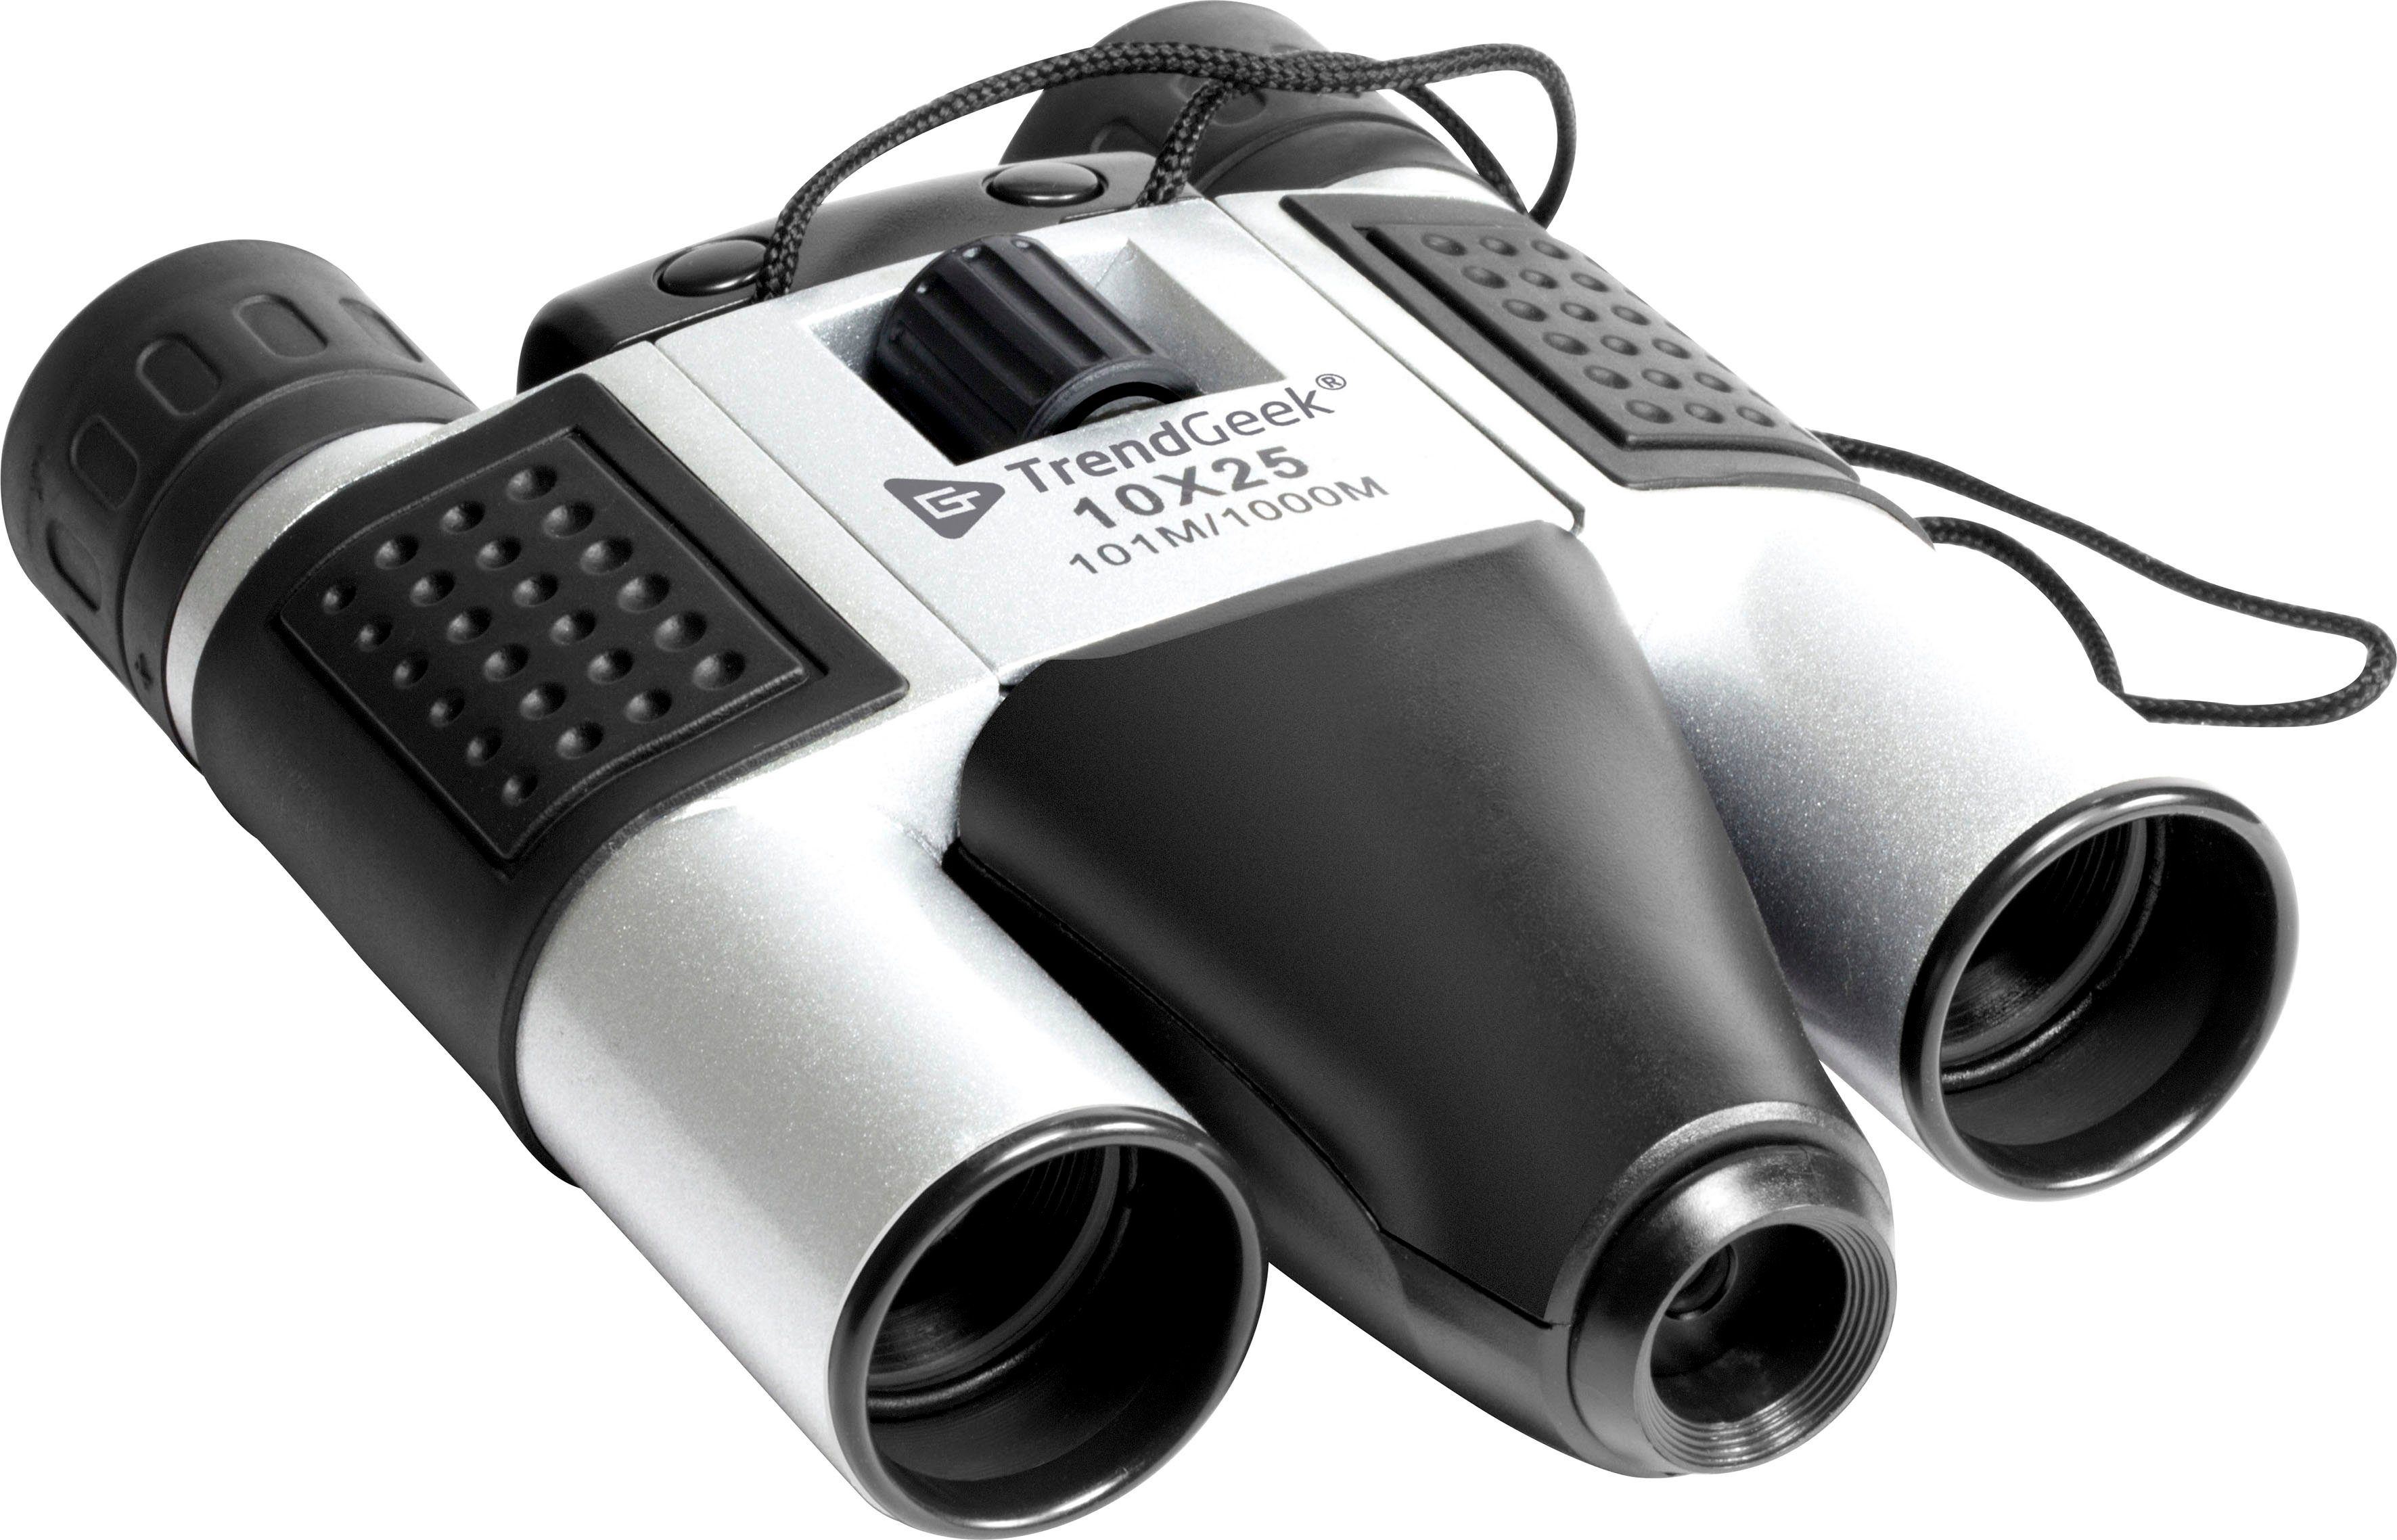 Fernglas 10x25 mit TrendGeek TG-125 Digitalkamera integrierter Technaxx